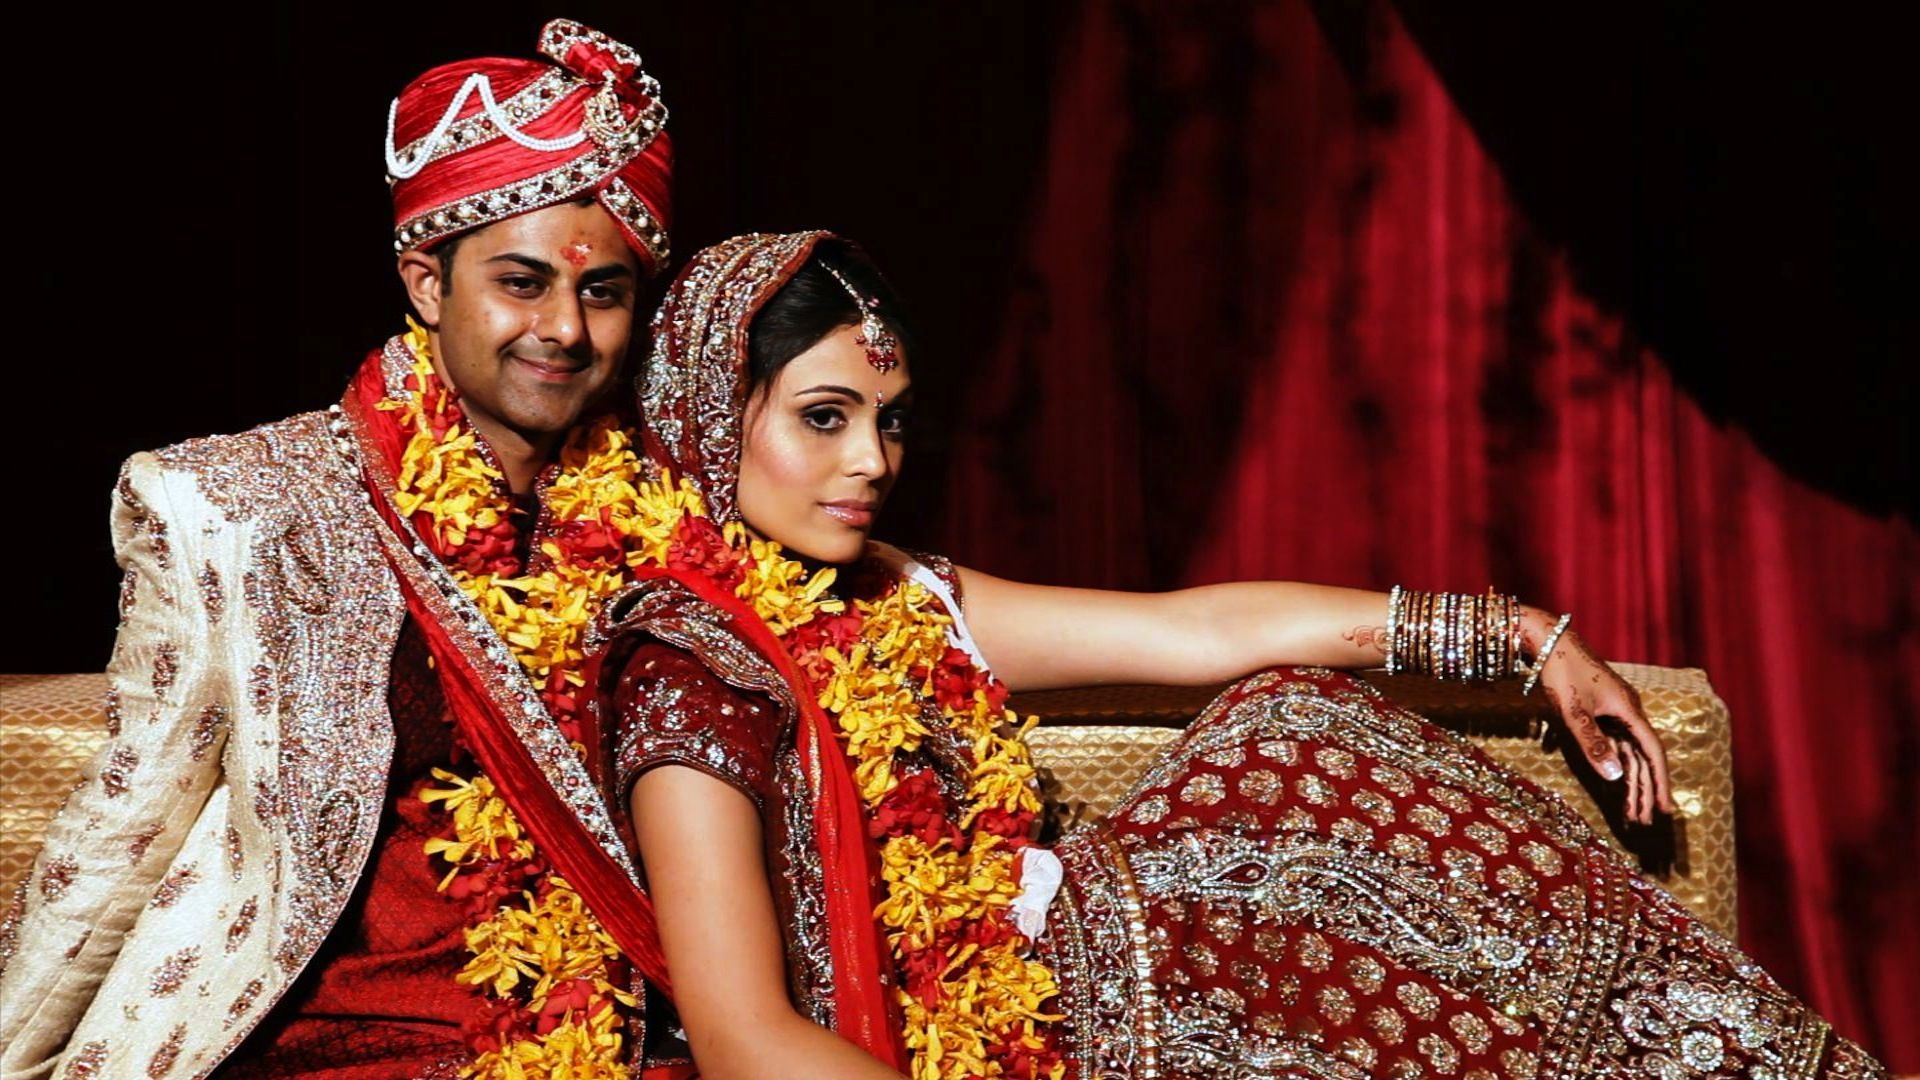 Bridal pose | Wedding dulhan pose, Indian wedding poses, Indian bride  photography poses